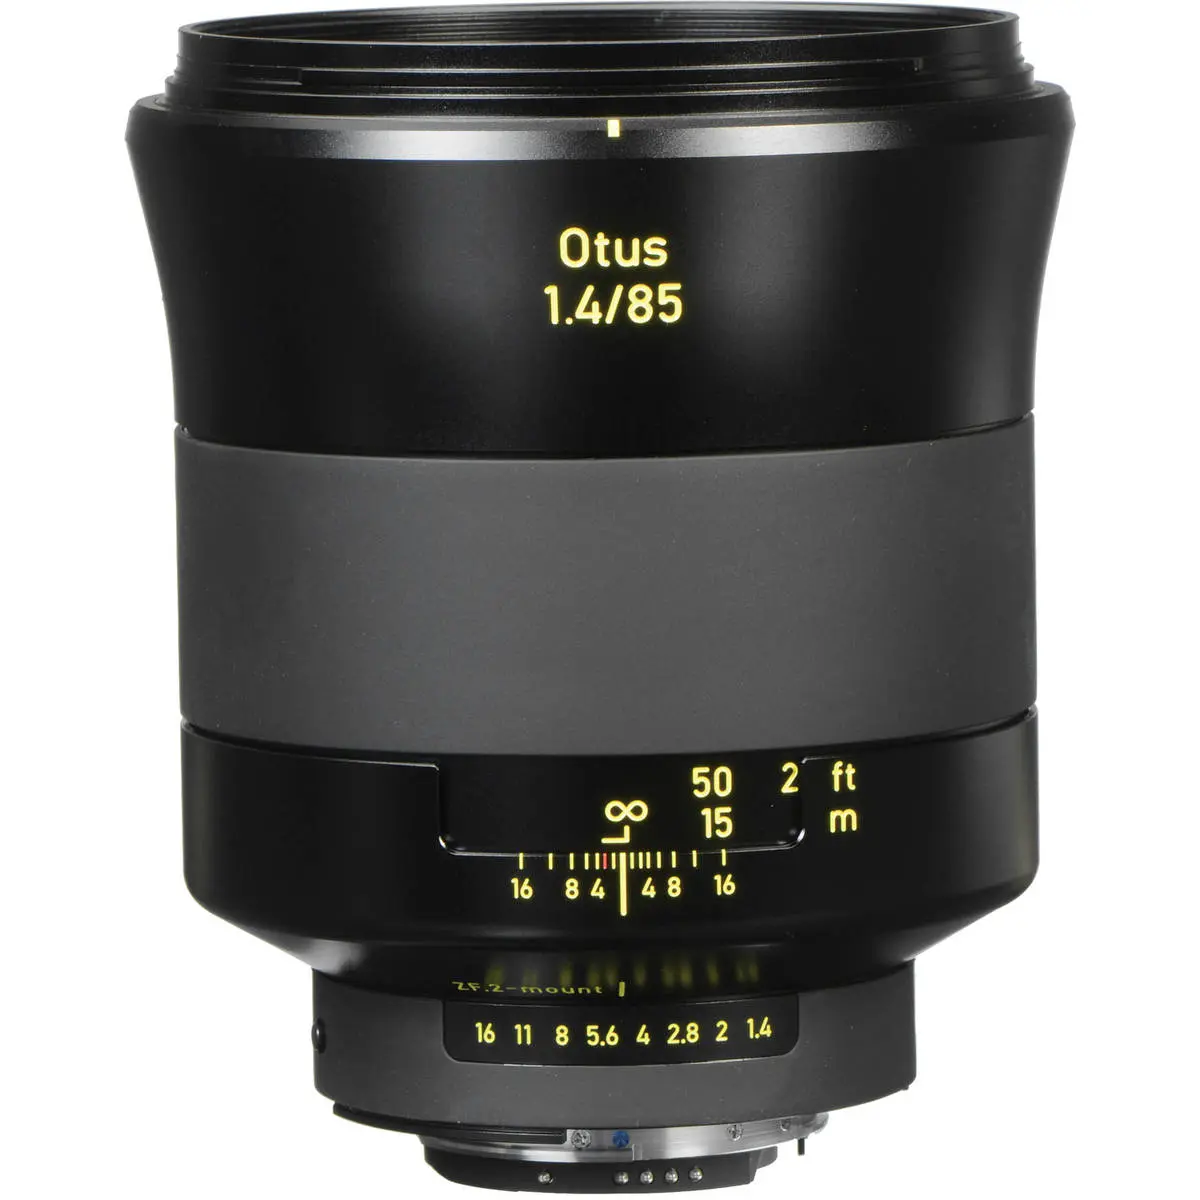 1. Carl Zeiss Otus Planar T* ZF.2 1.4/85 (Nikon) Lens